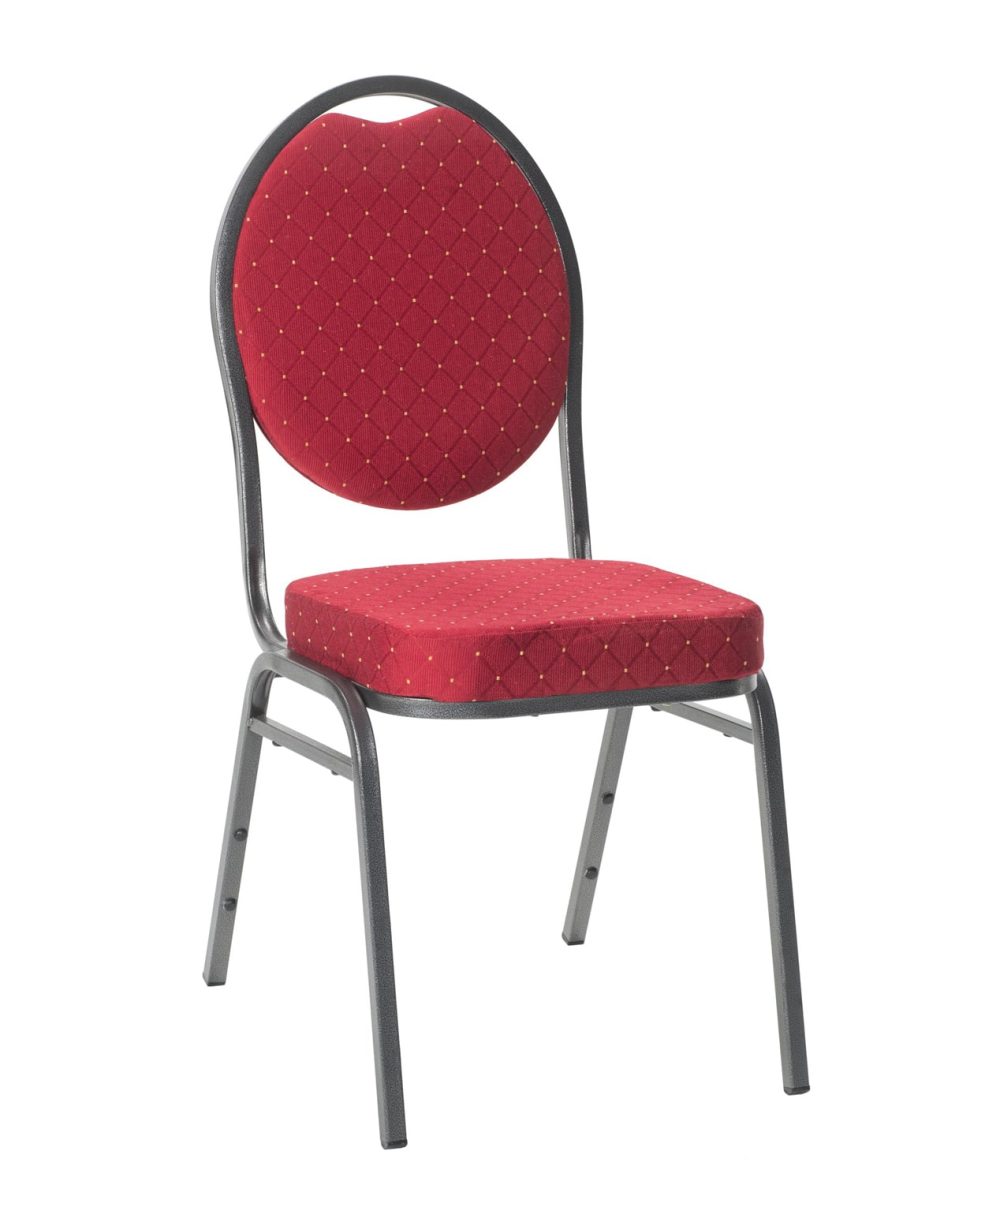 linda-chair-side